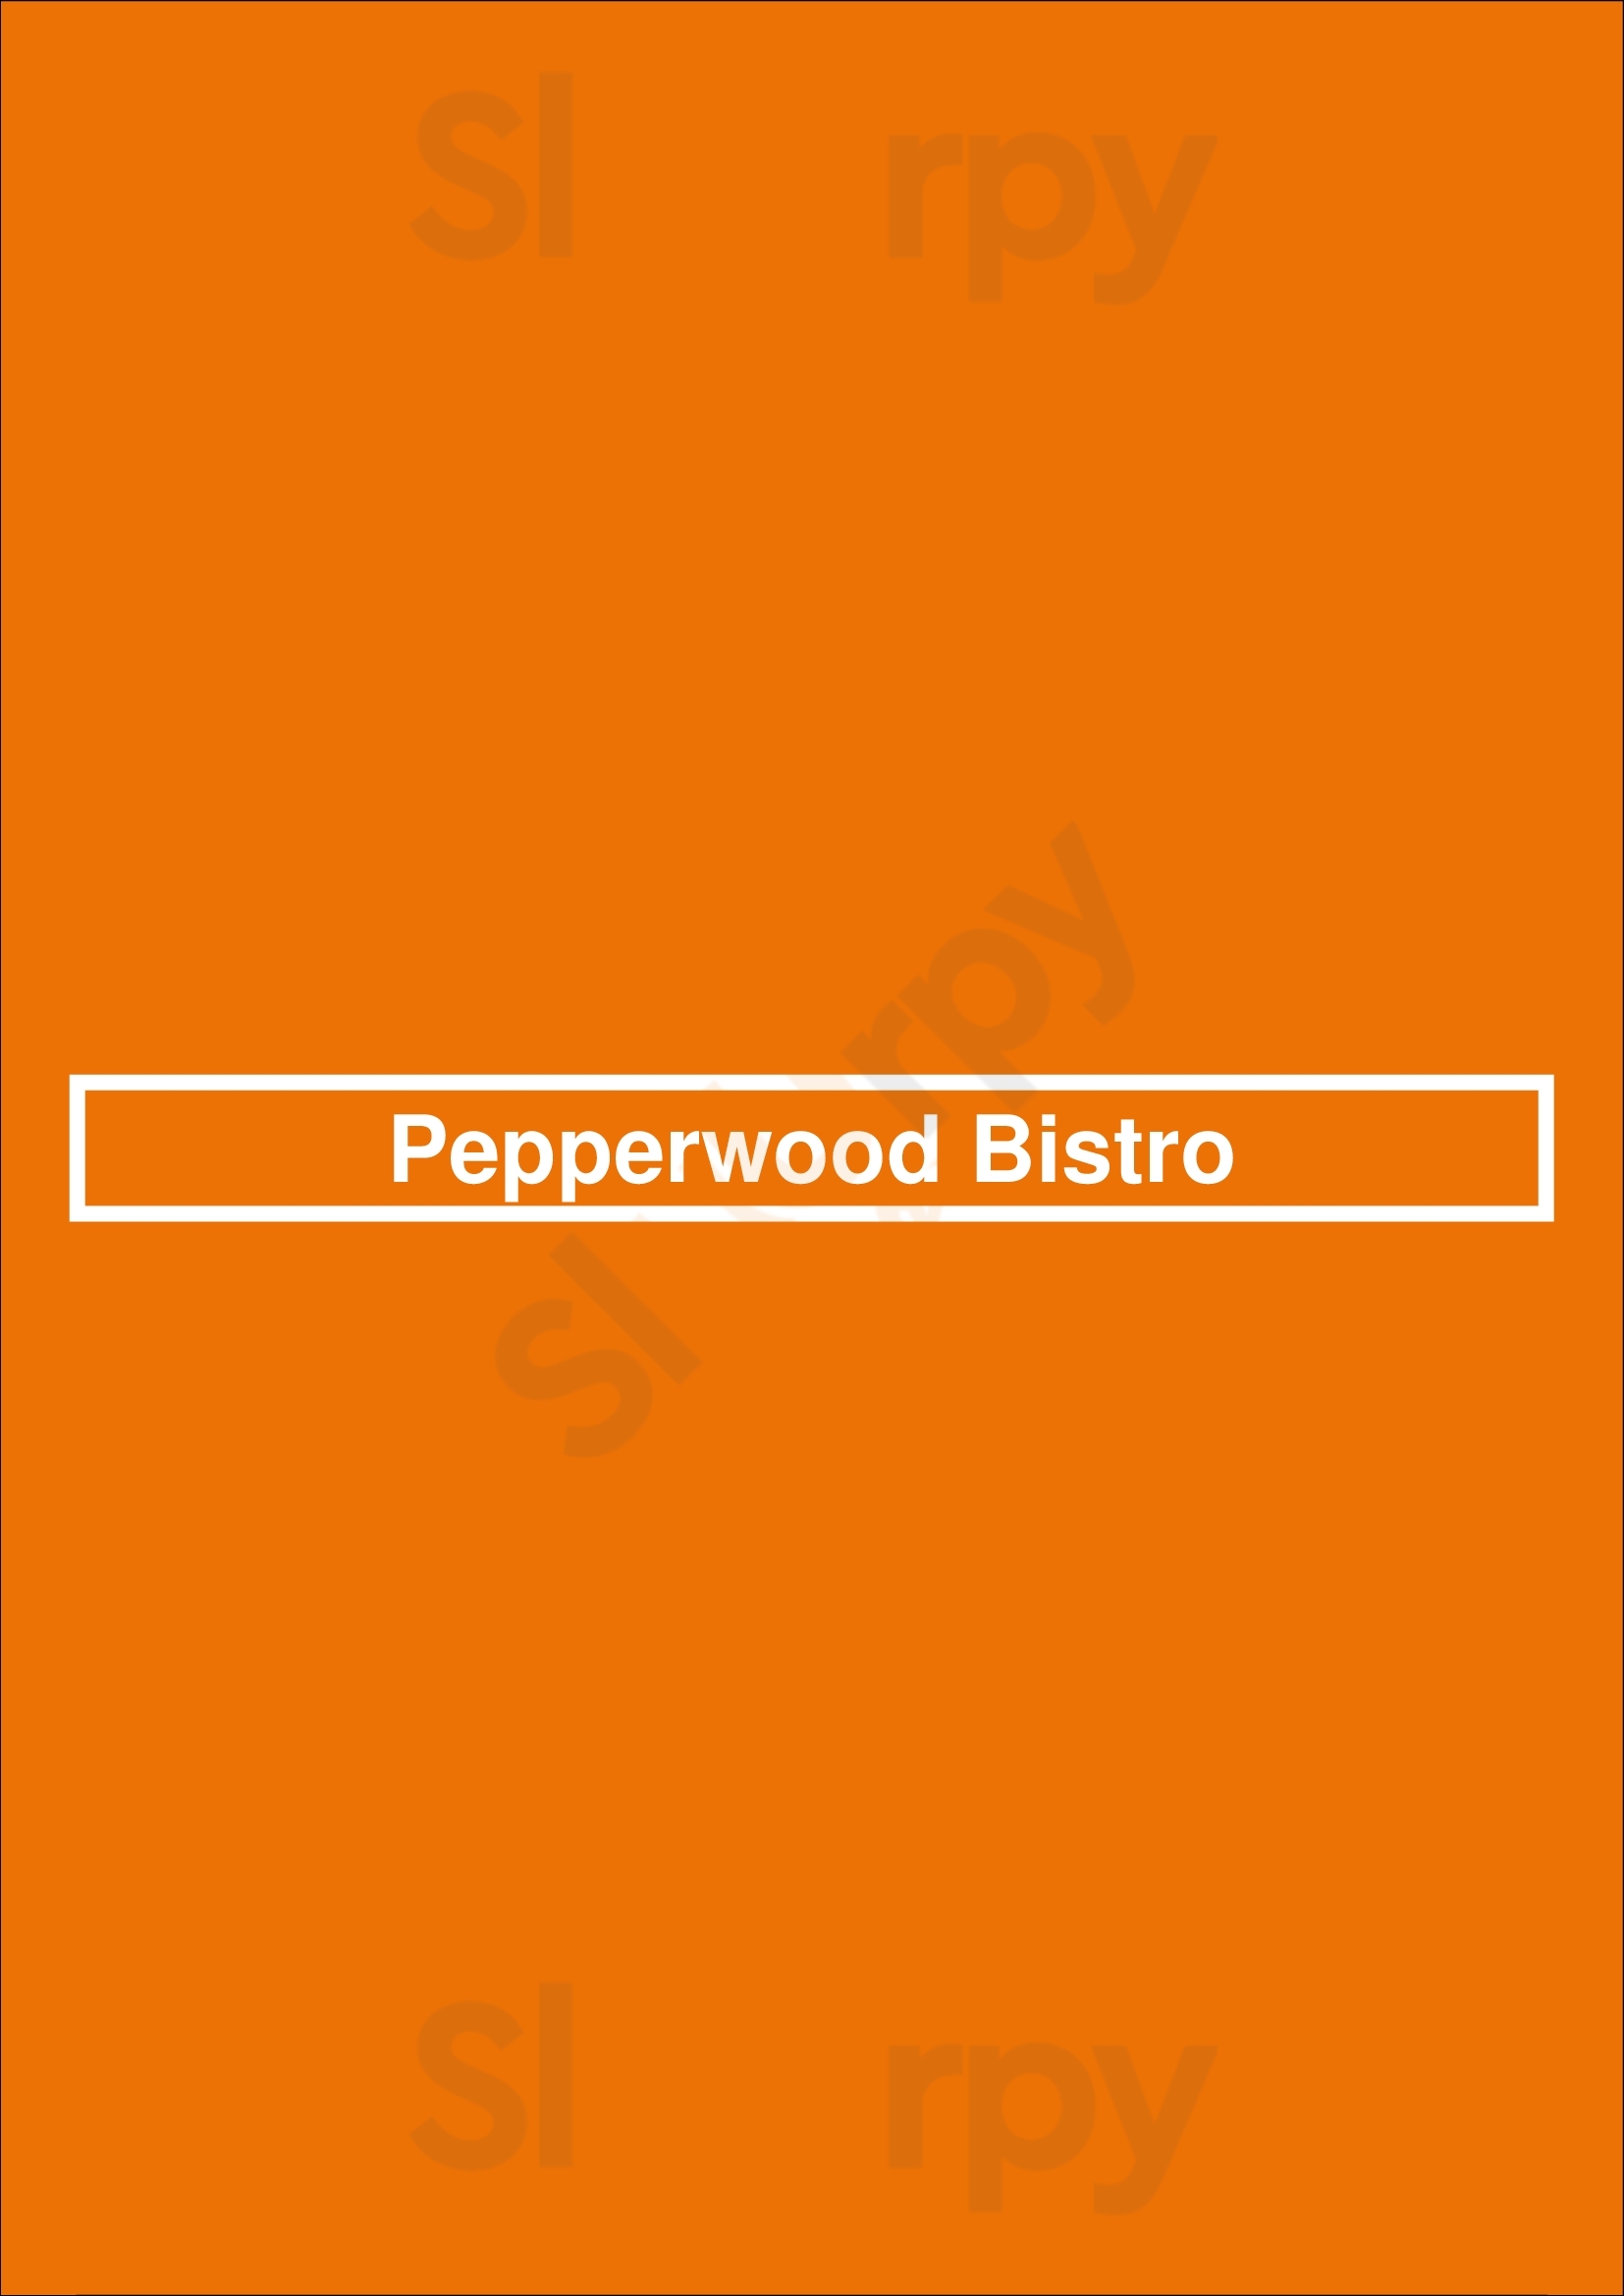 Pepperwood Bistro Burlington Menu - 1